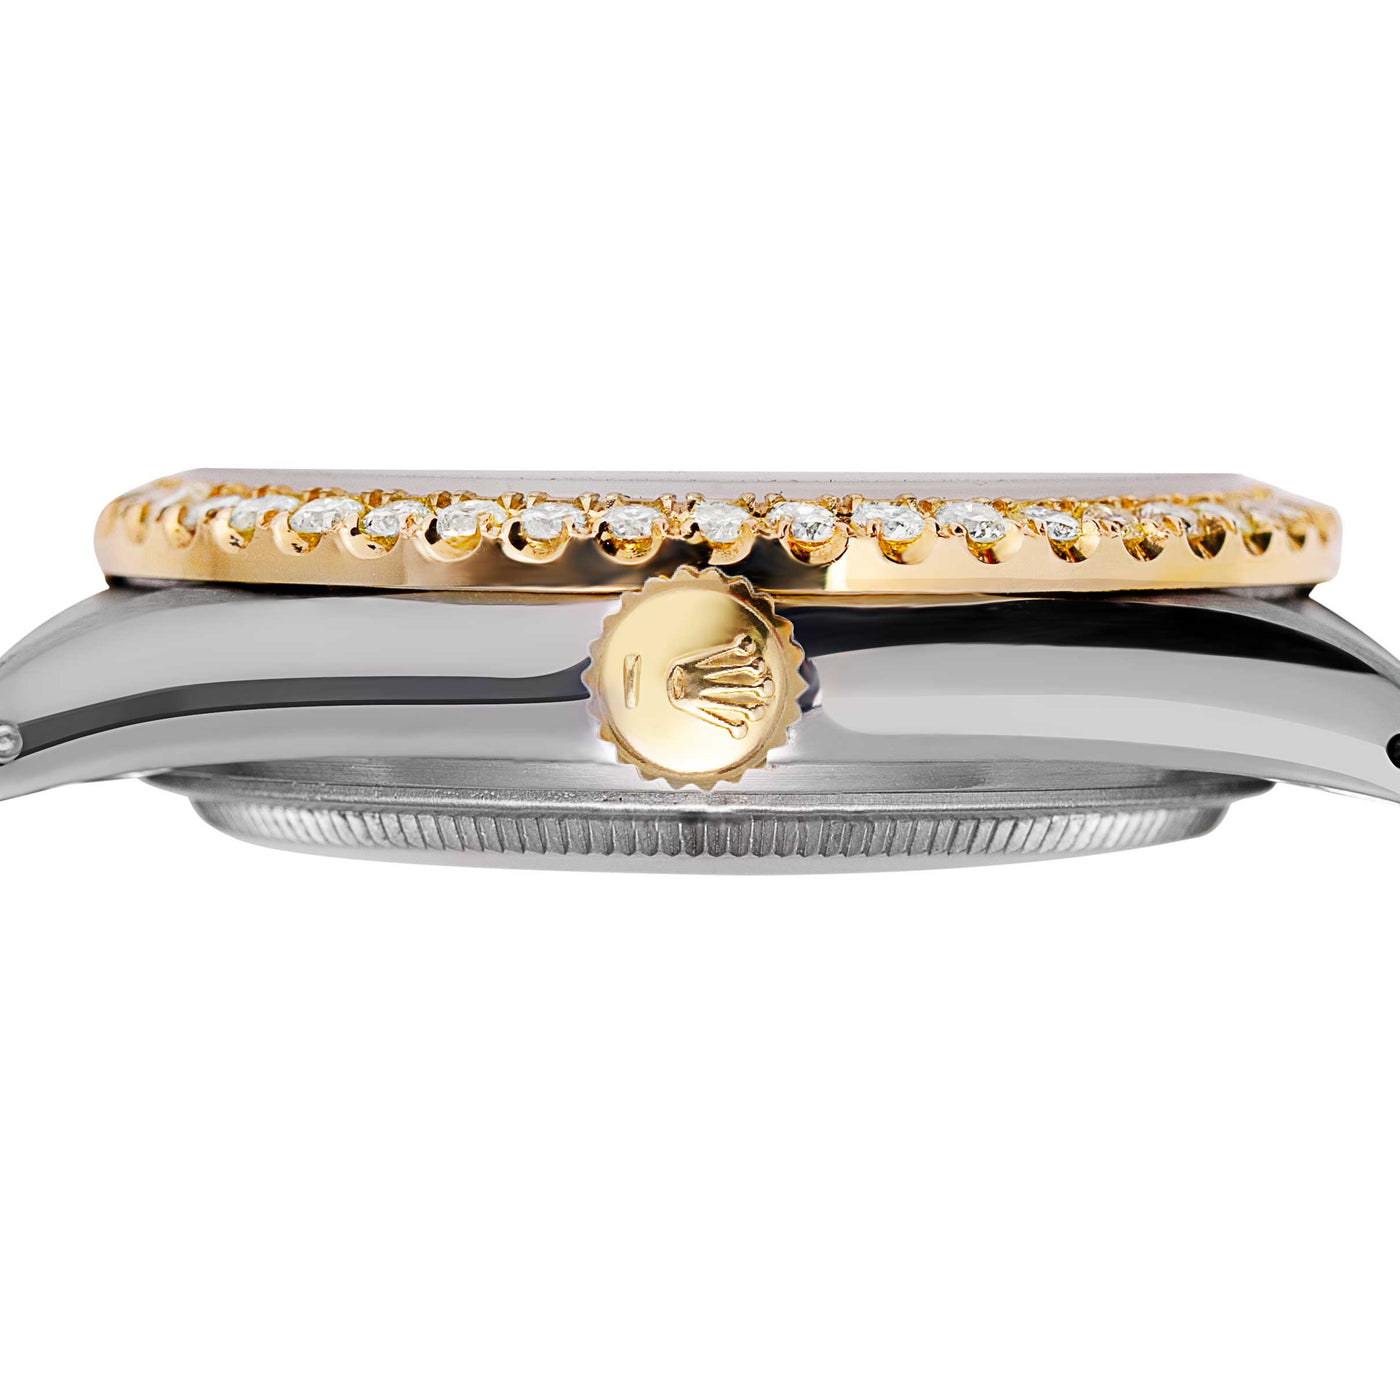 Rolex Datejust Diamond Bezel Watch 36mm Brown Roman Dial | 2.15ct